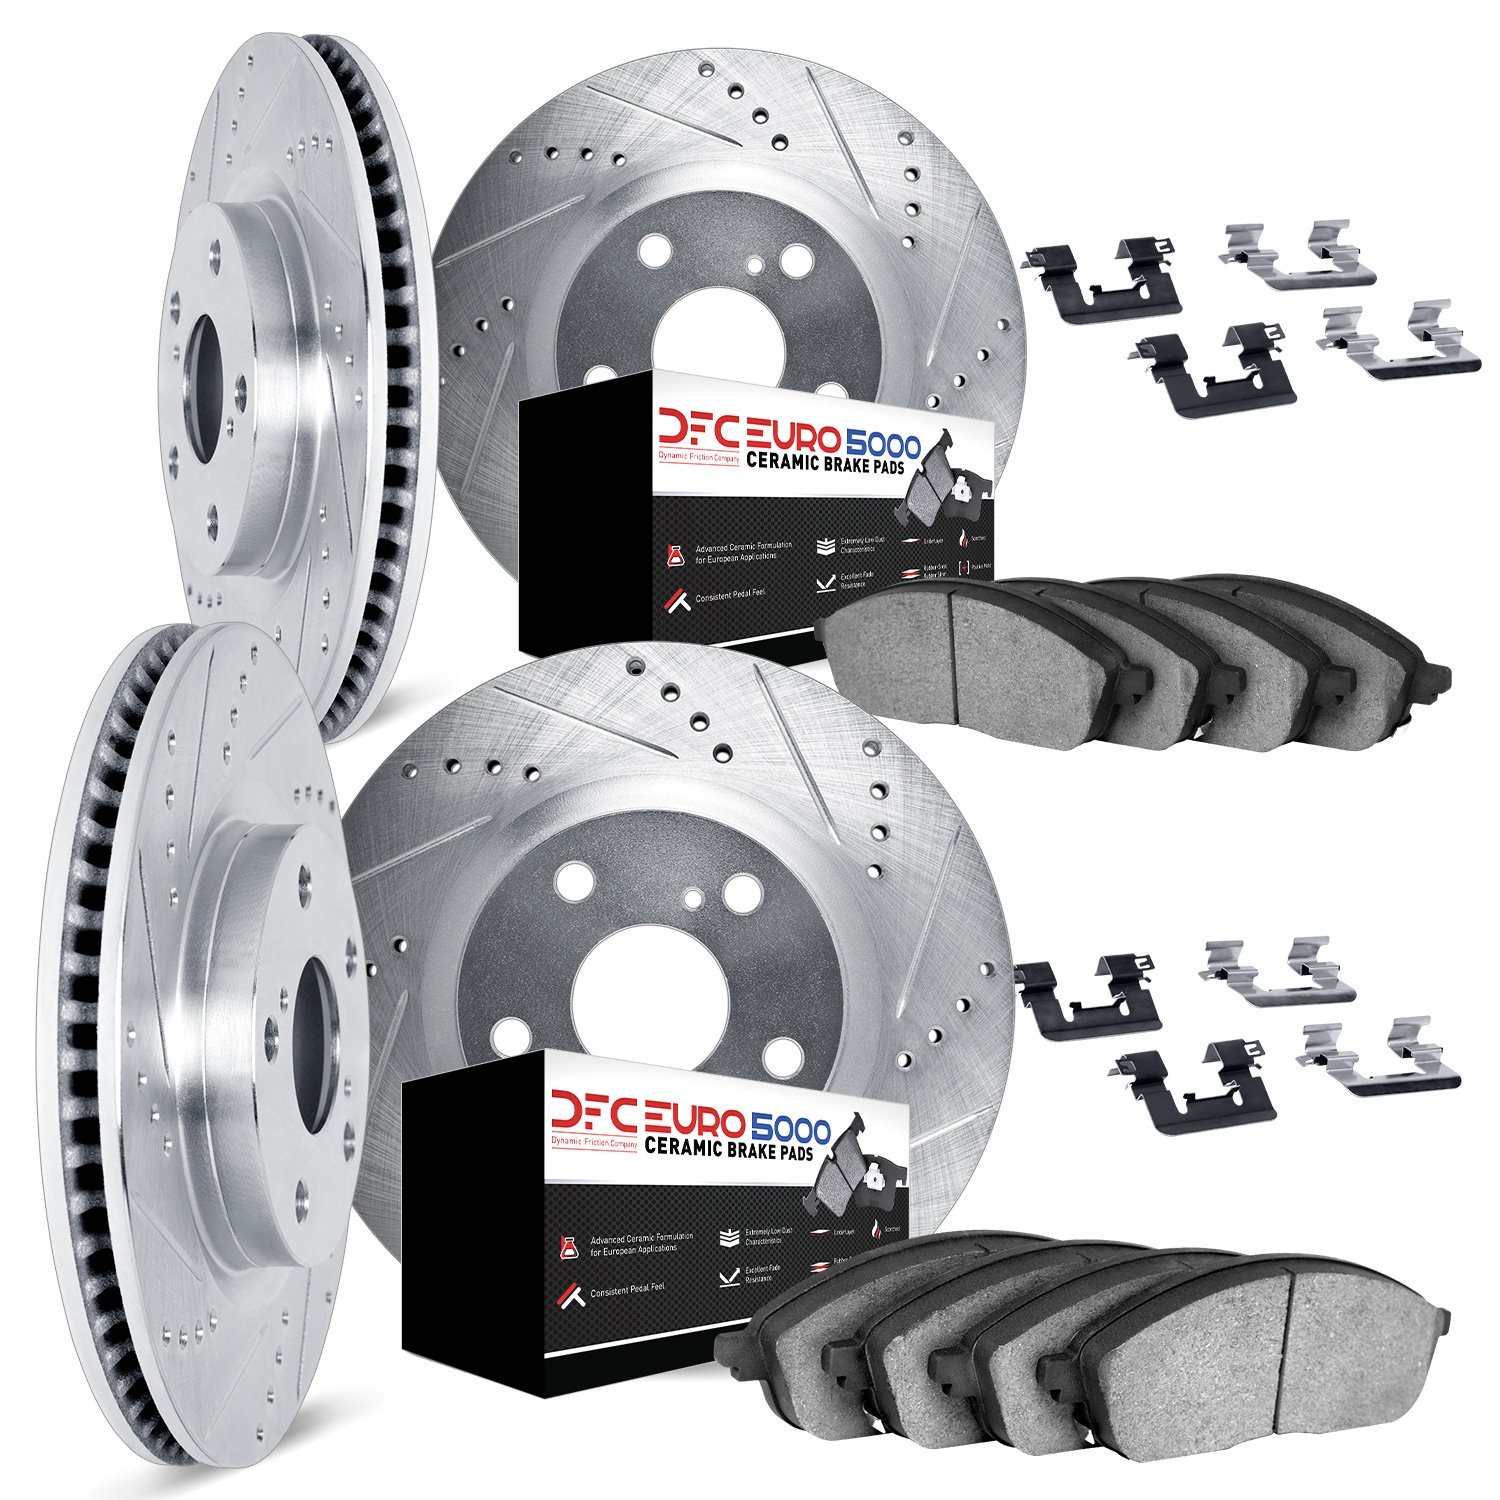 7614-54005 Drilled/Slotted Brake Rotors w/5000 Euro Ceramic Brake Pads Kit & Hardware [Silver], 2011-2014 Ford/Lincoln/Mercury/M